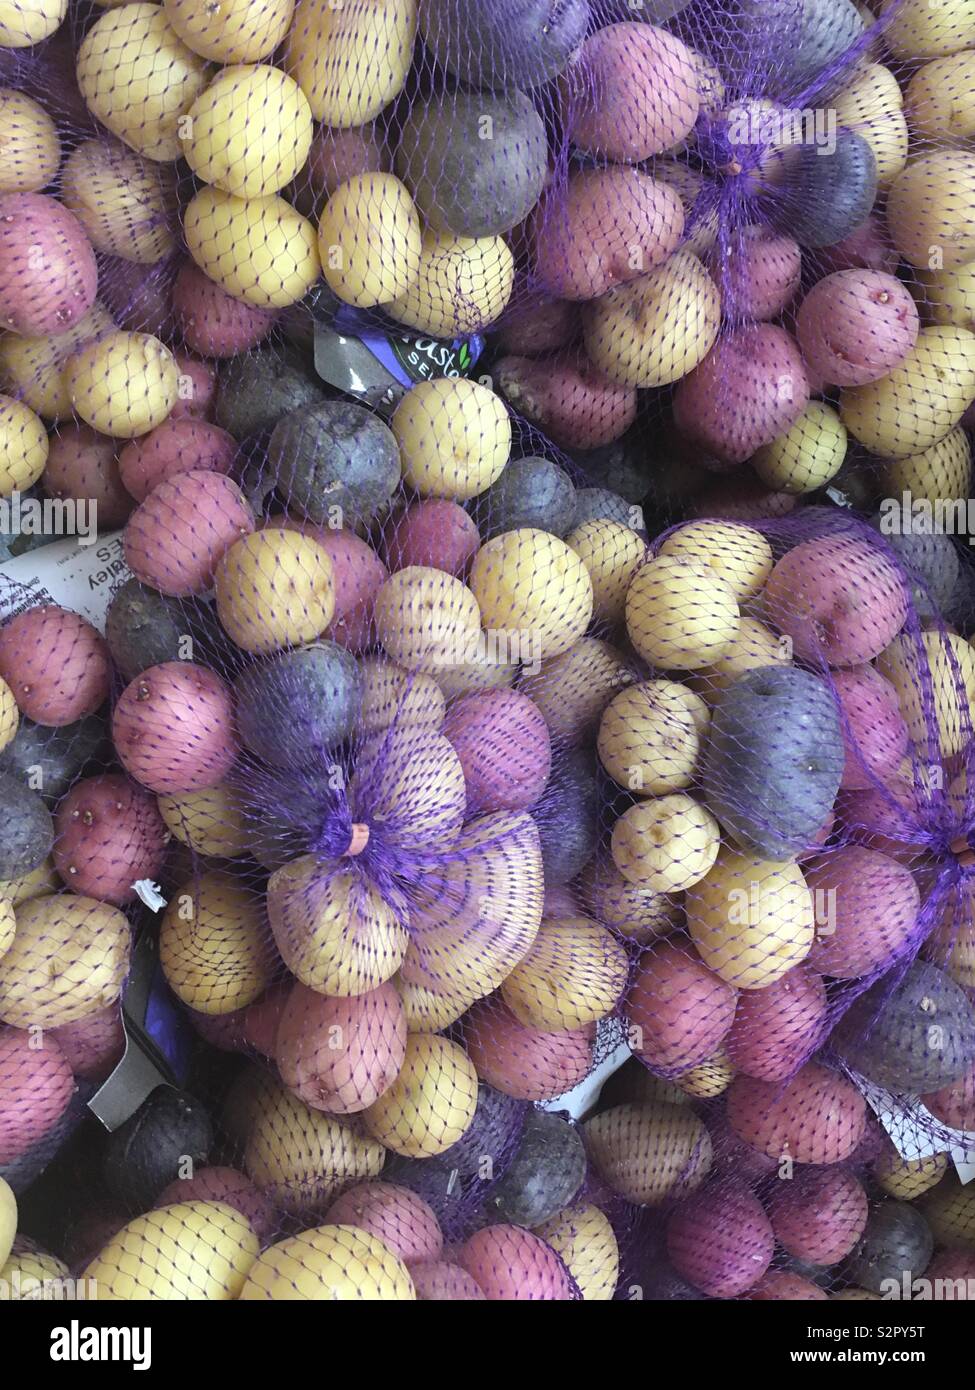 Multi color potatoes Stock Photo